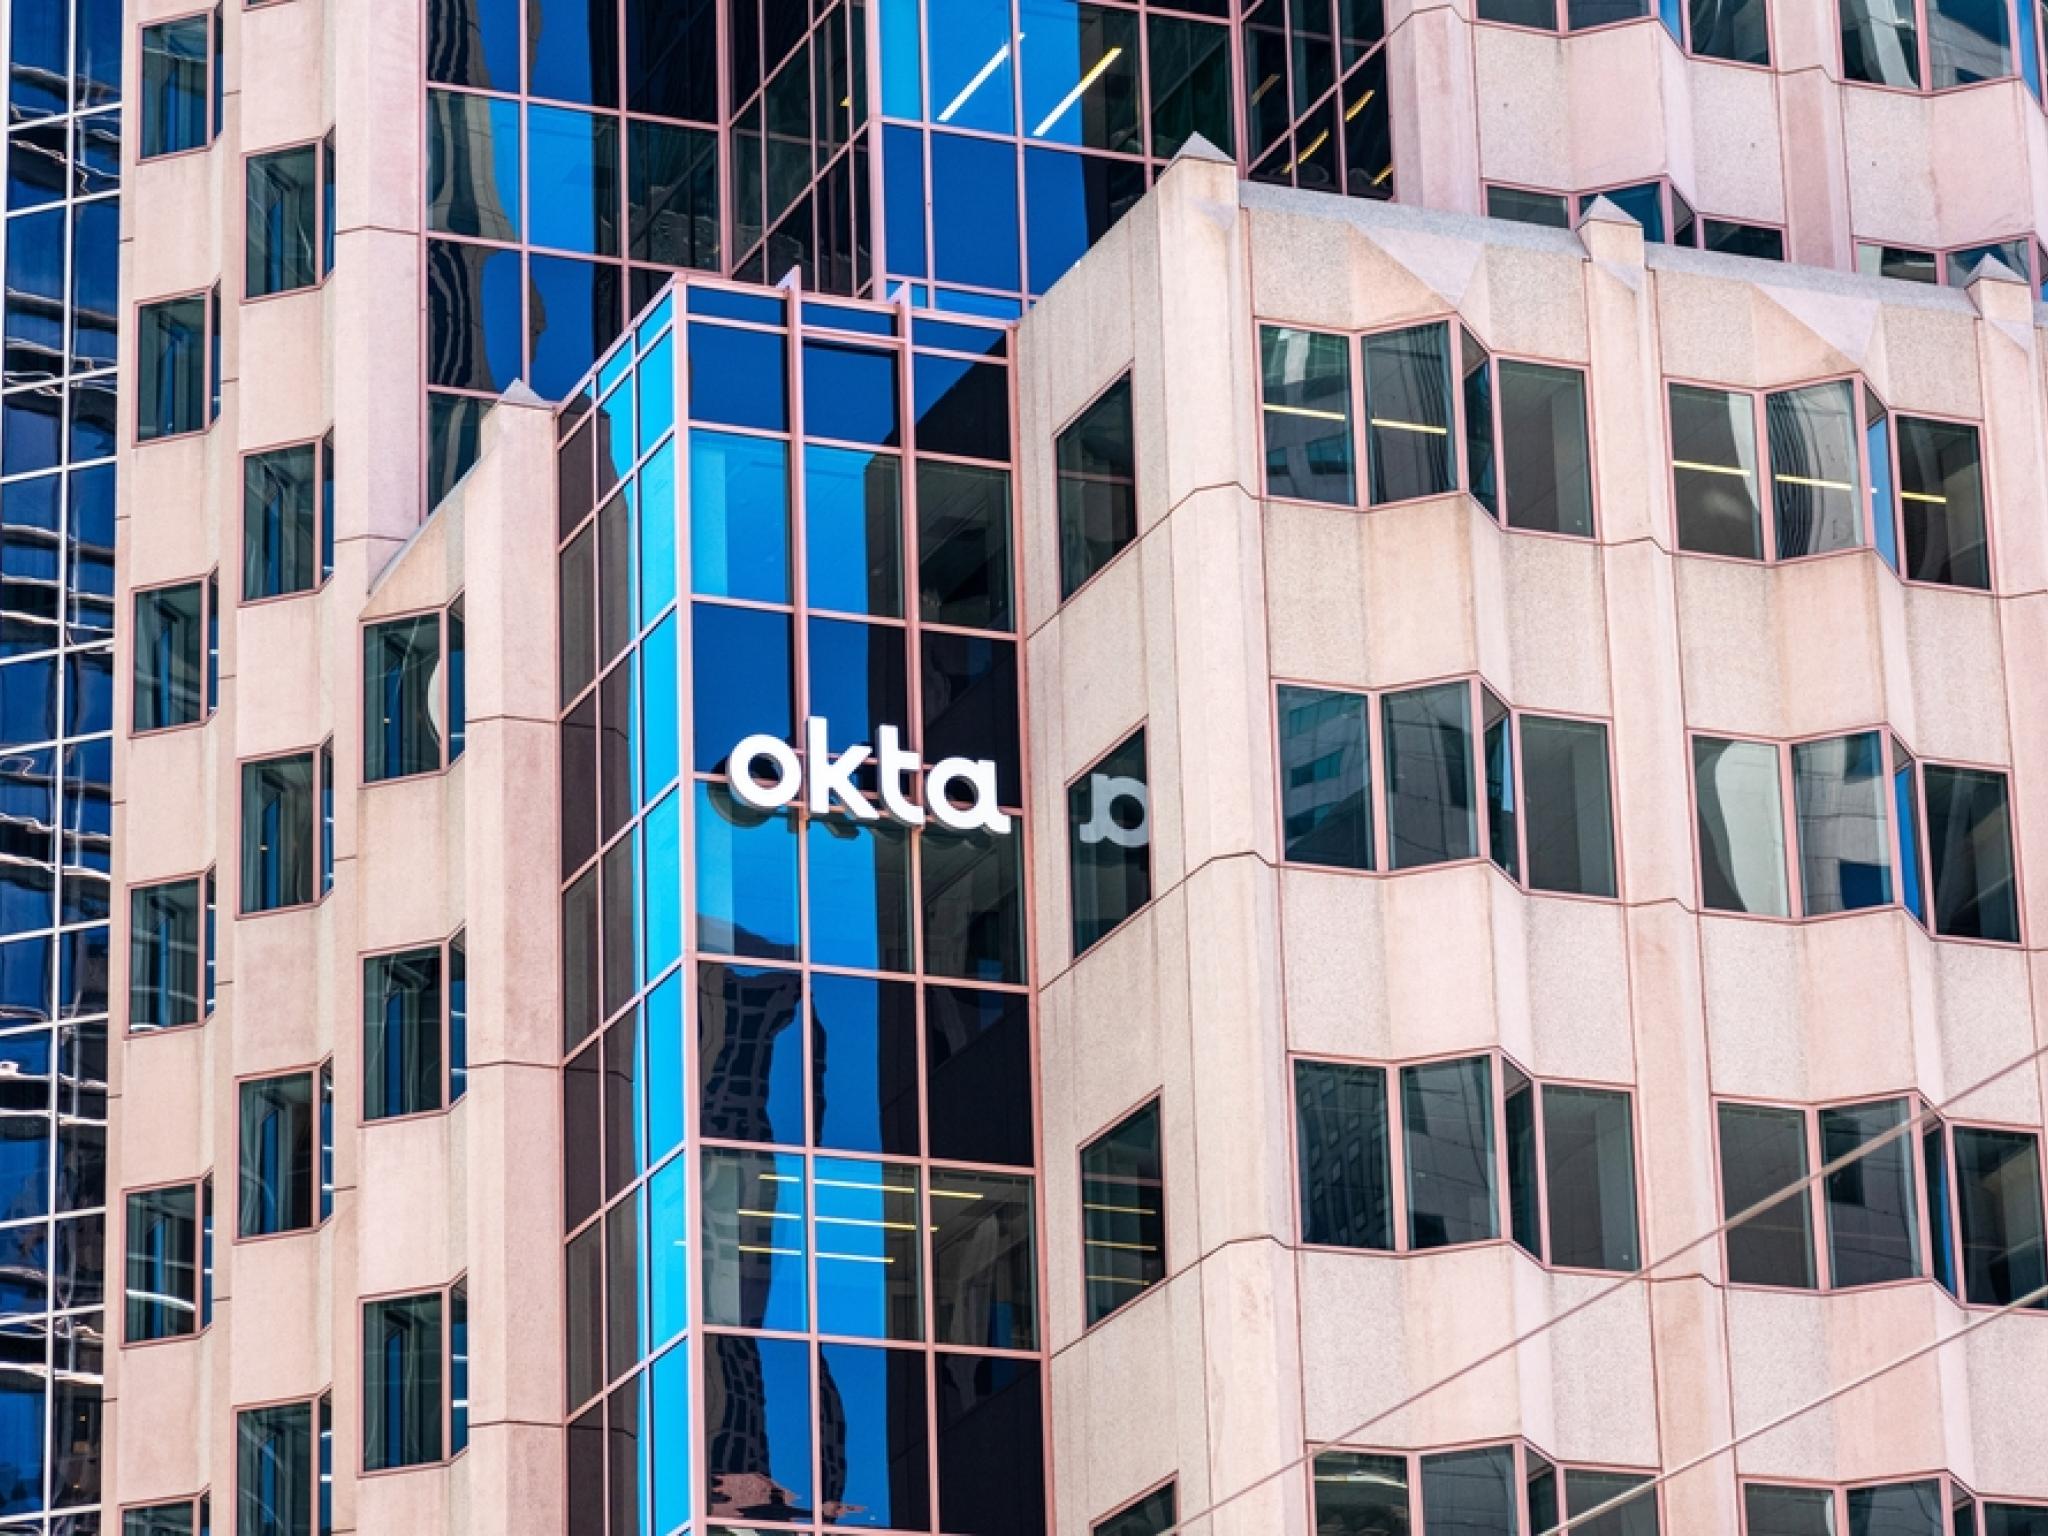  okta-q1-earnings-revenue-beat-eps-beat-raised-guidance--massive-opportunity-ahead-and-more 